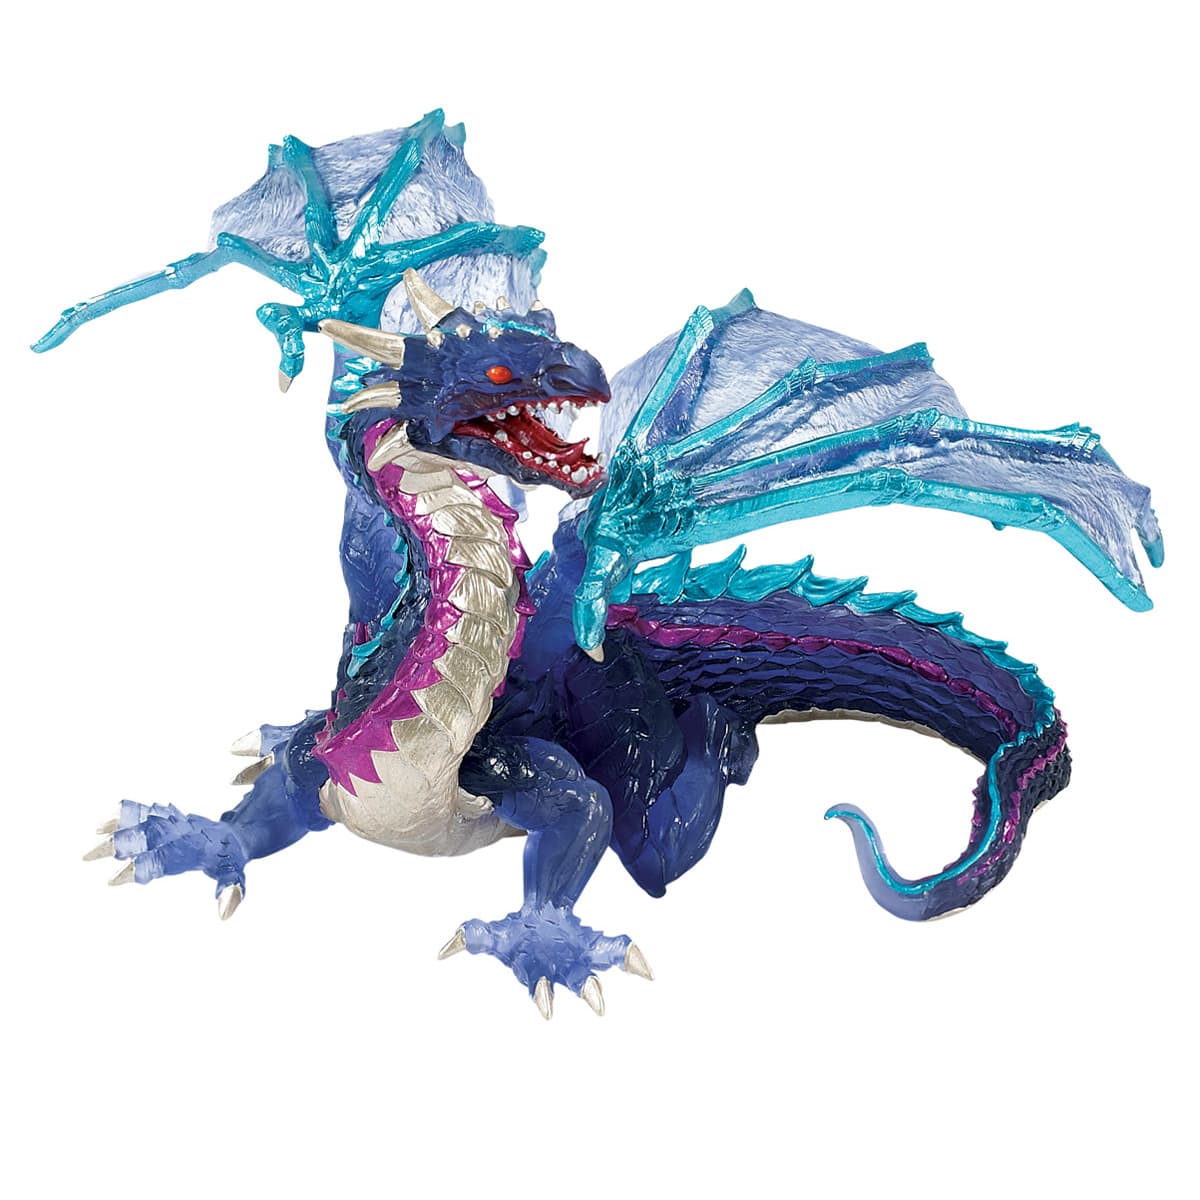 Ice Dragon Fantasy Safari Ltd Educational Figurine Toys 2010 Hj41 for sale online 